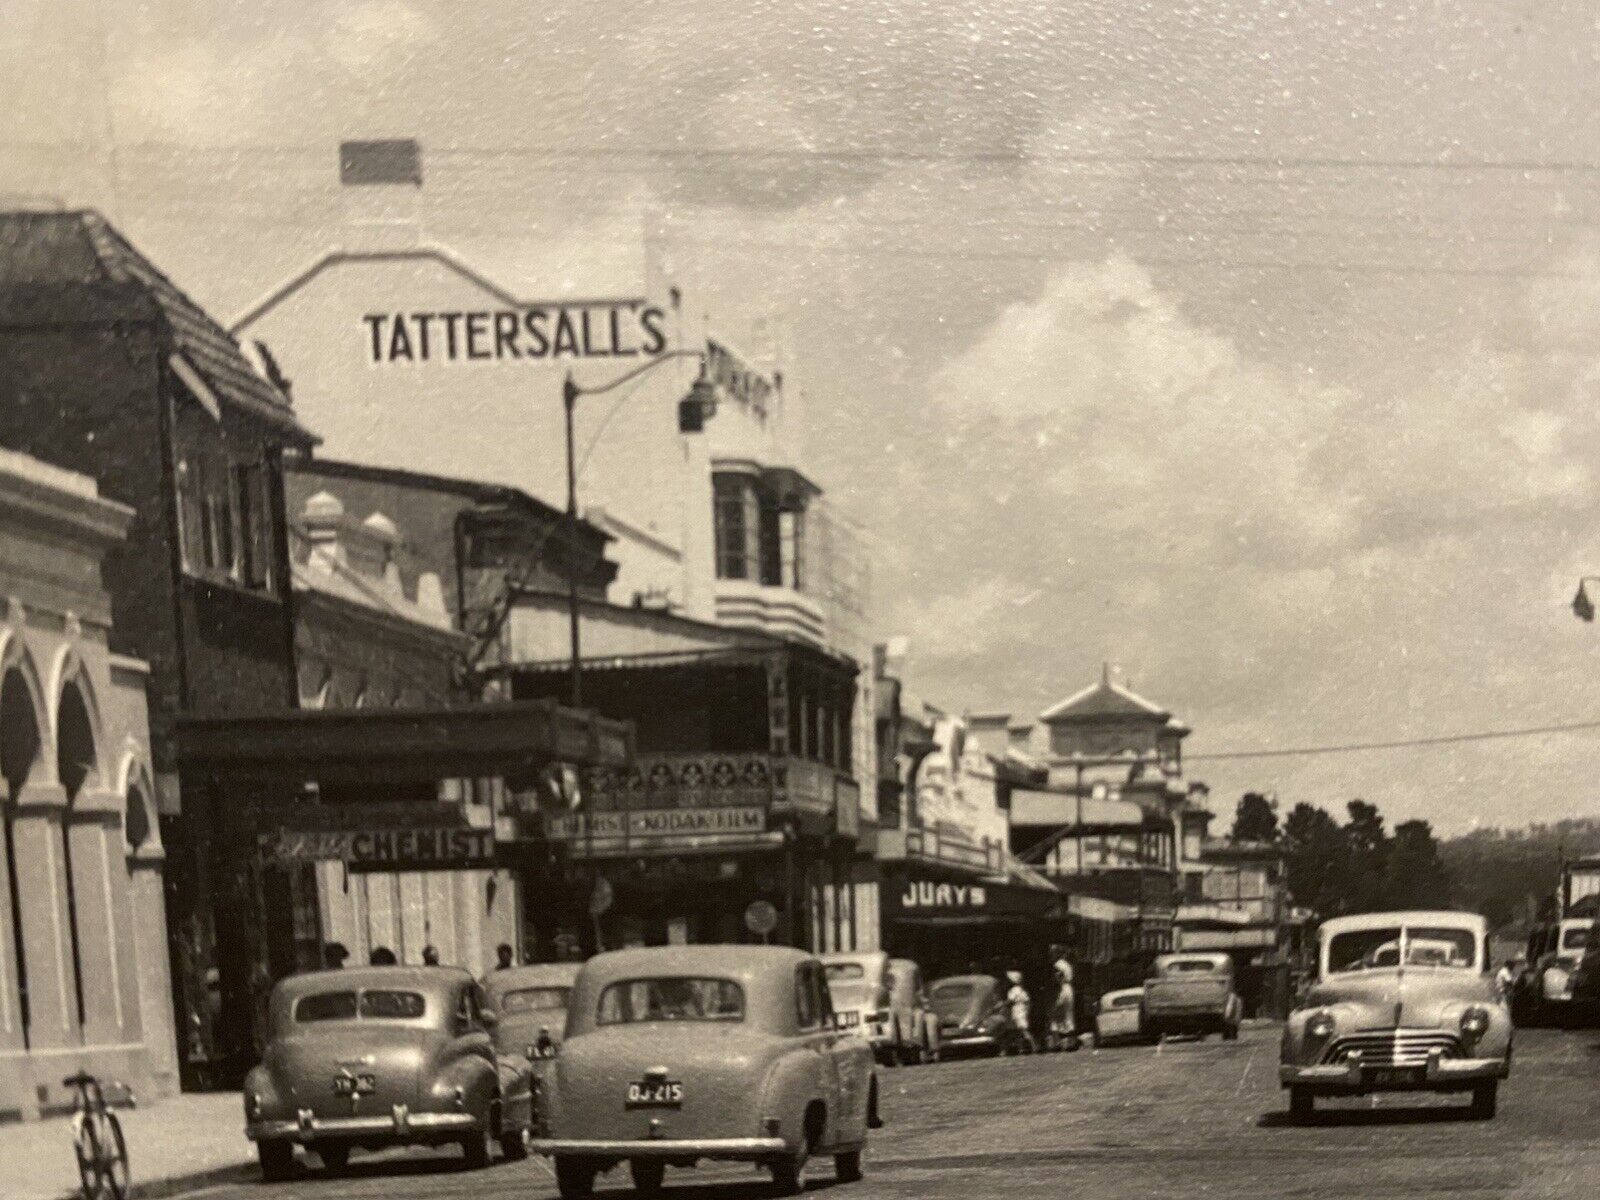 ORIGINAL 1950s COUNTRY QLD CITY MAIN STREET HISTORIC TATTERSALLS PHOTO EJ BARR